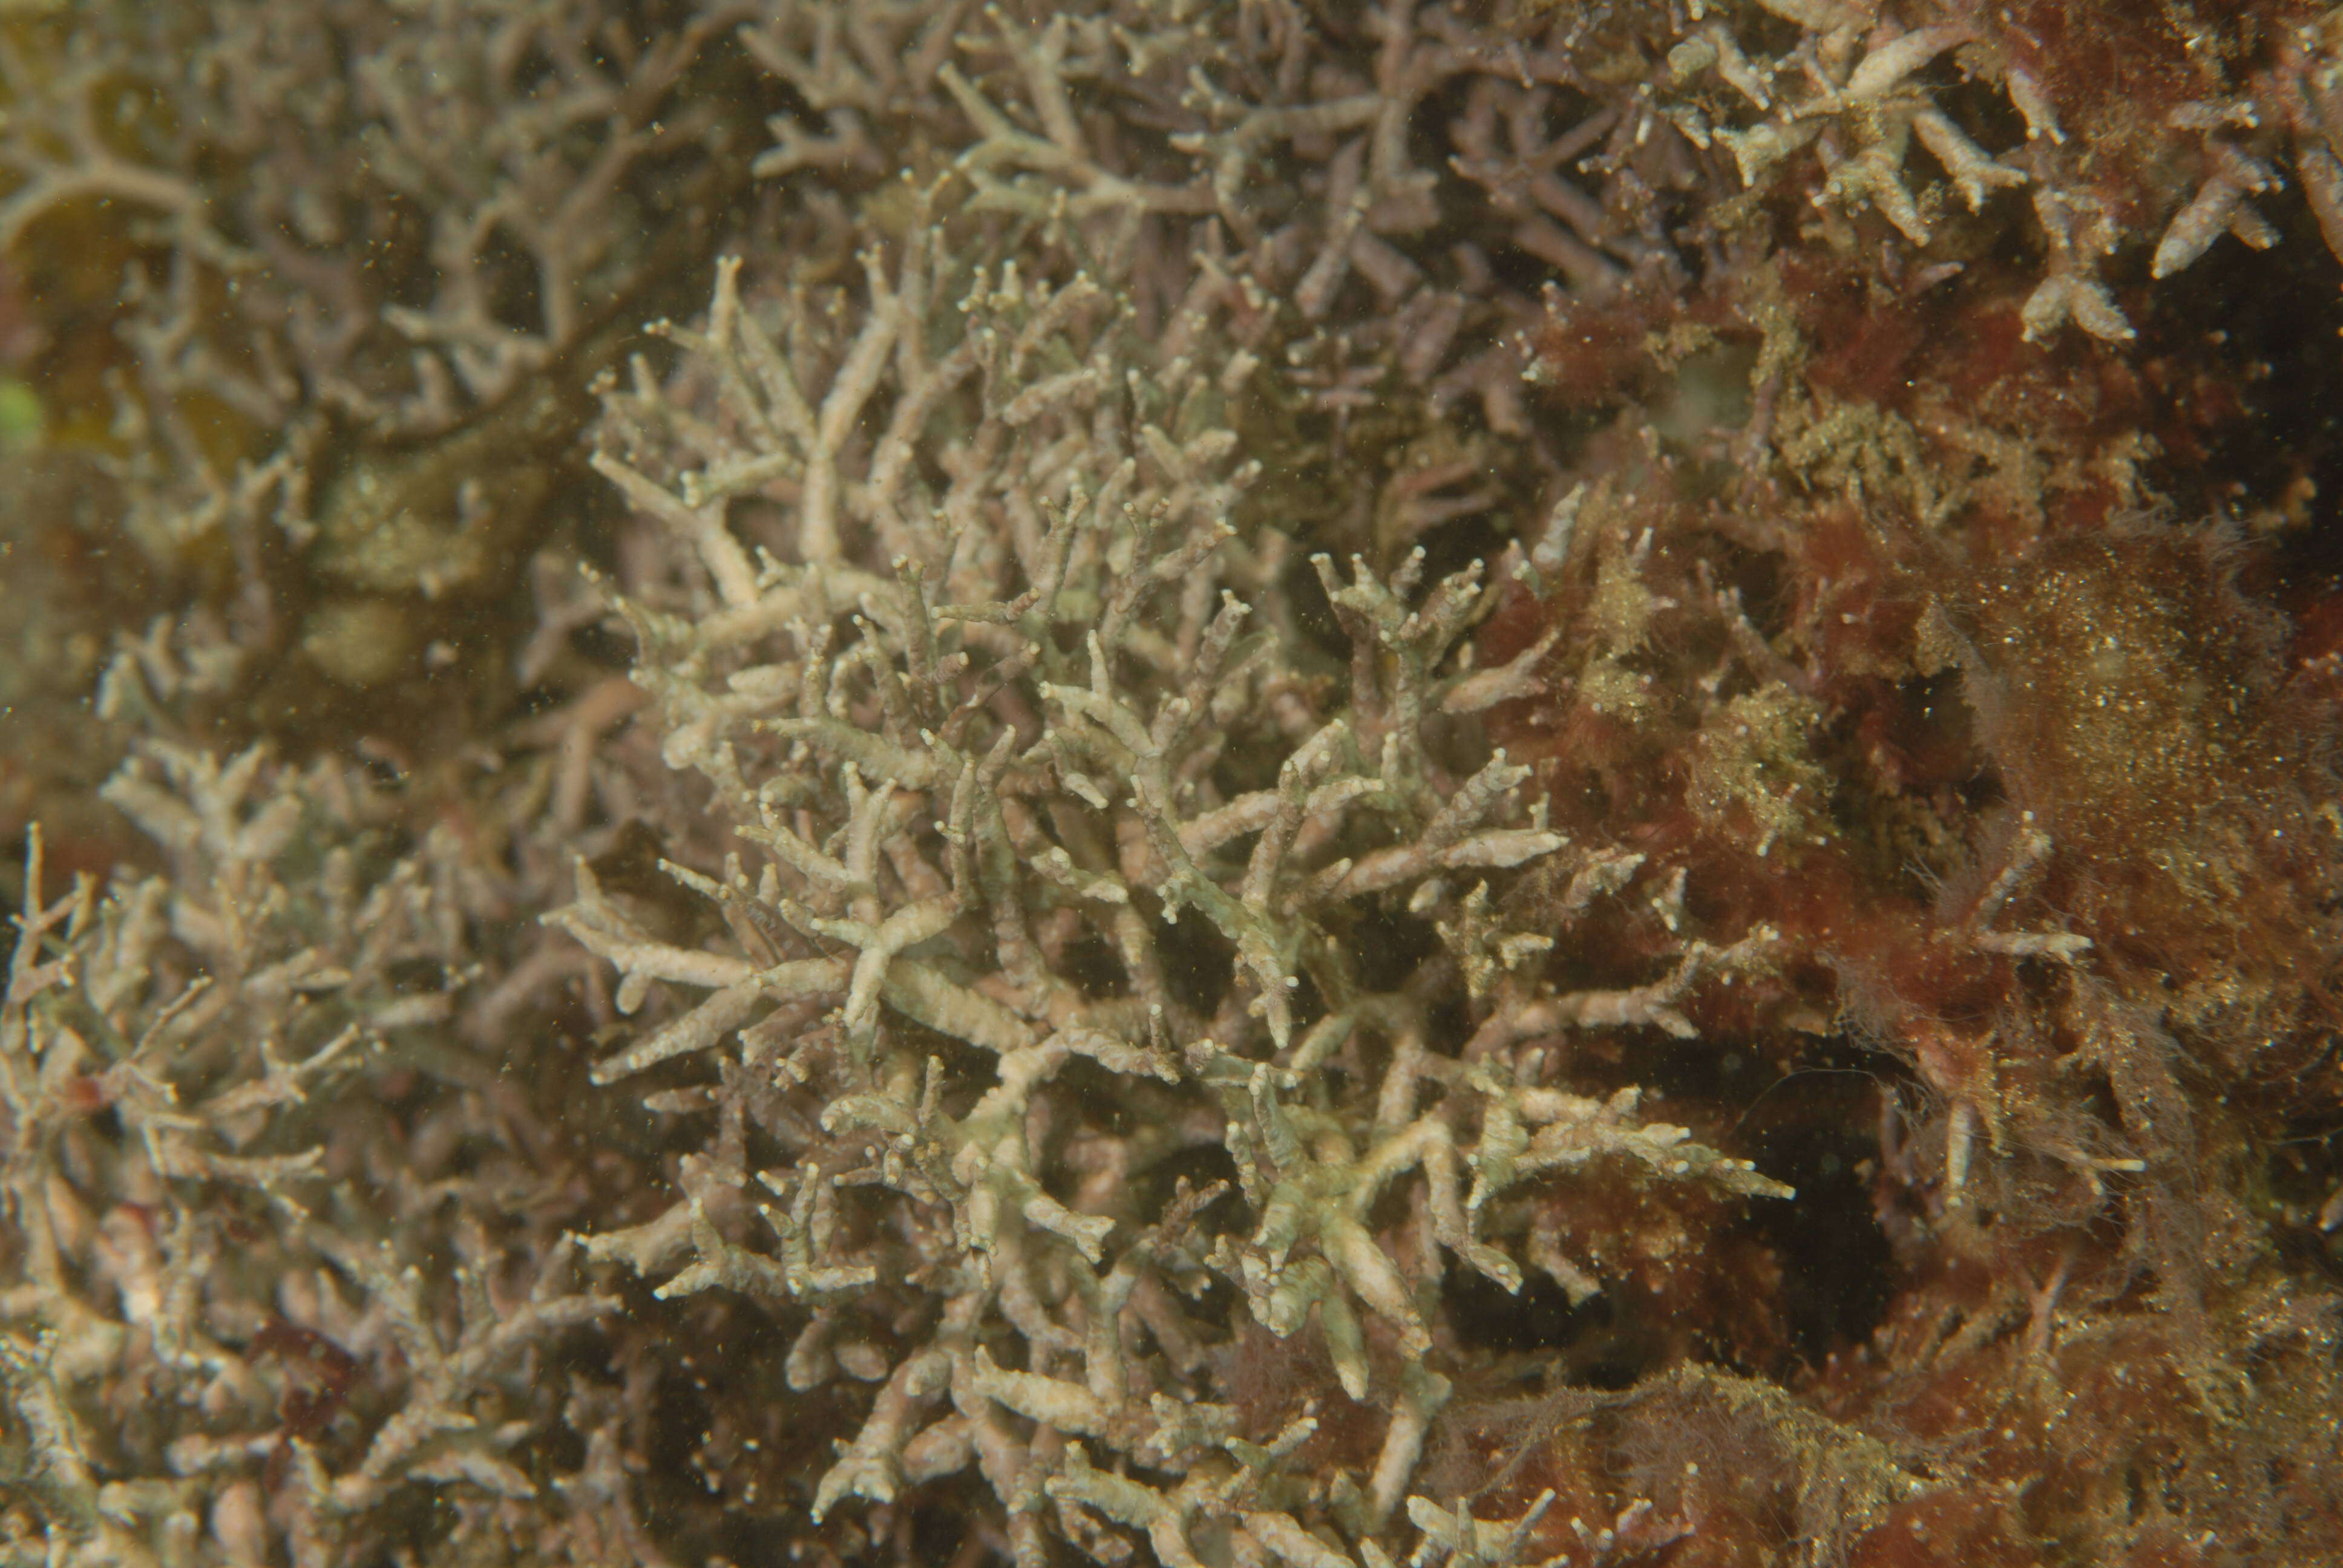 Image of Corallinaceae